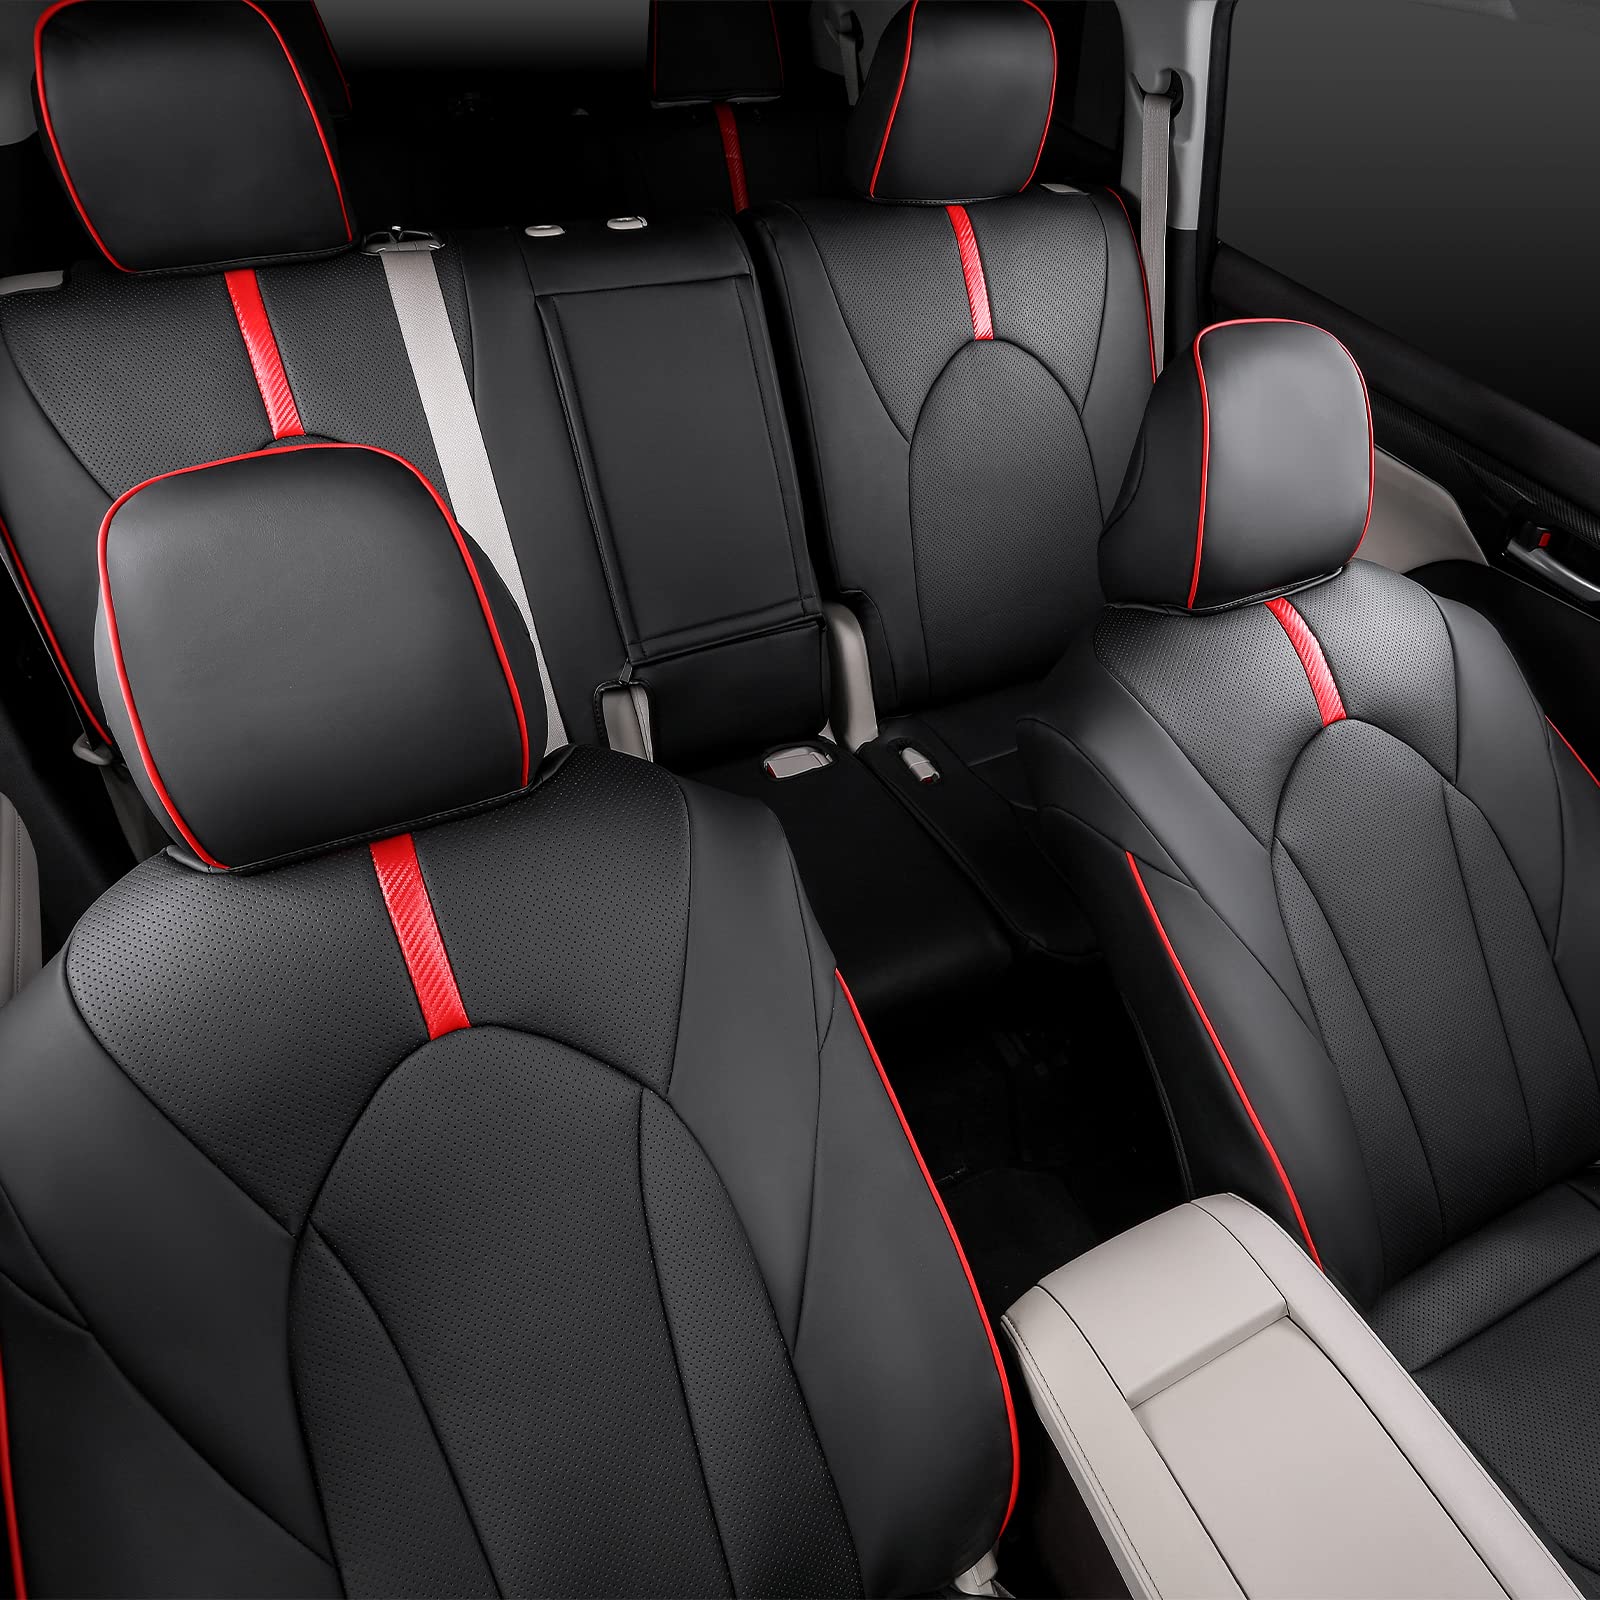 Xipoo Fit 2020-2023 Toyota Highlander 8 Seats Car Seat Cover 3 Row Car Seat Protector for Toyota Highlander 2020 2021 2022 2023 Accessories (Fit 2020-2023 W/Second Row 40/60 Split, S Black+R